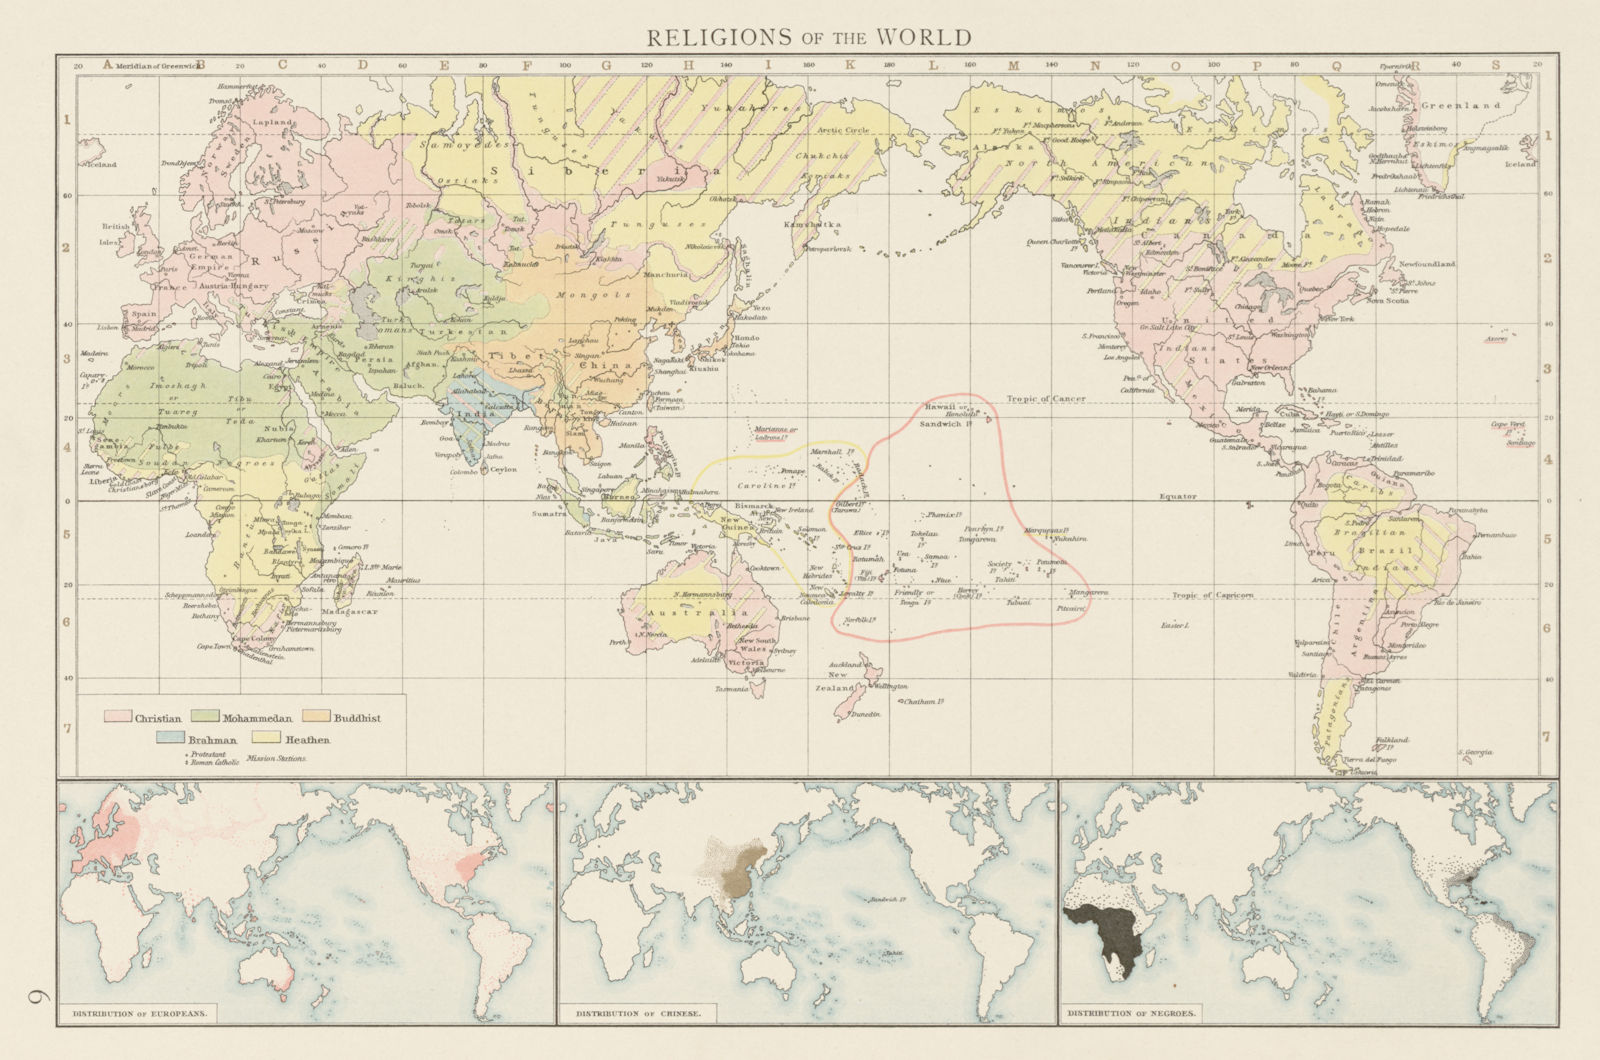 Religions of the world. Christian Islam Buddhist Heathen Hindu. TIMES 1900 map